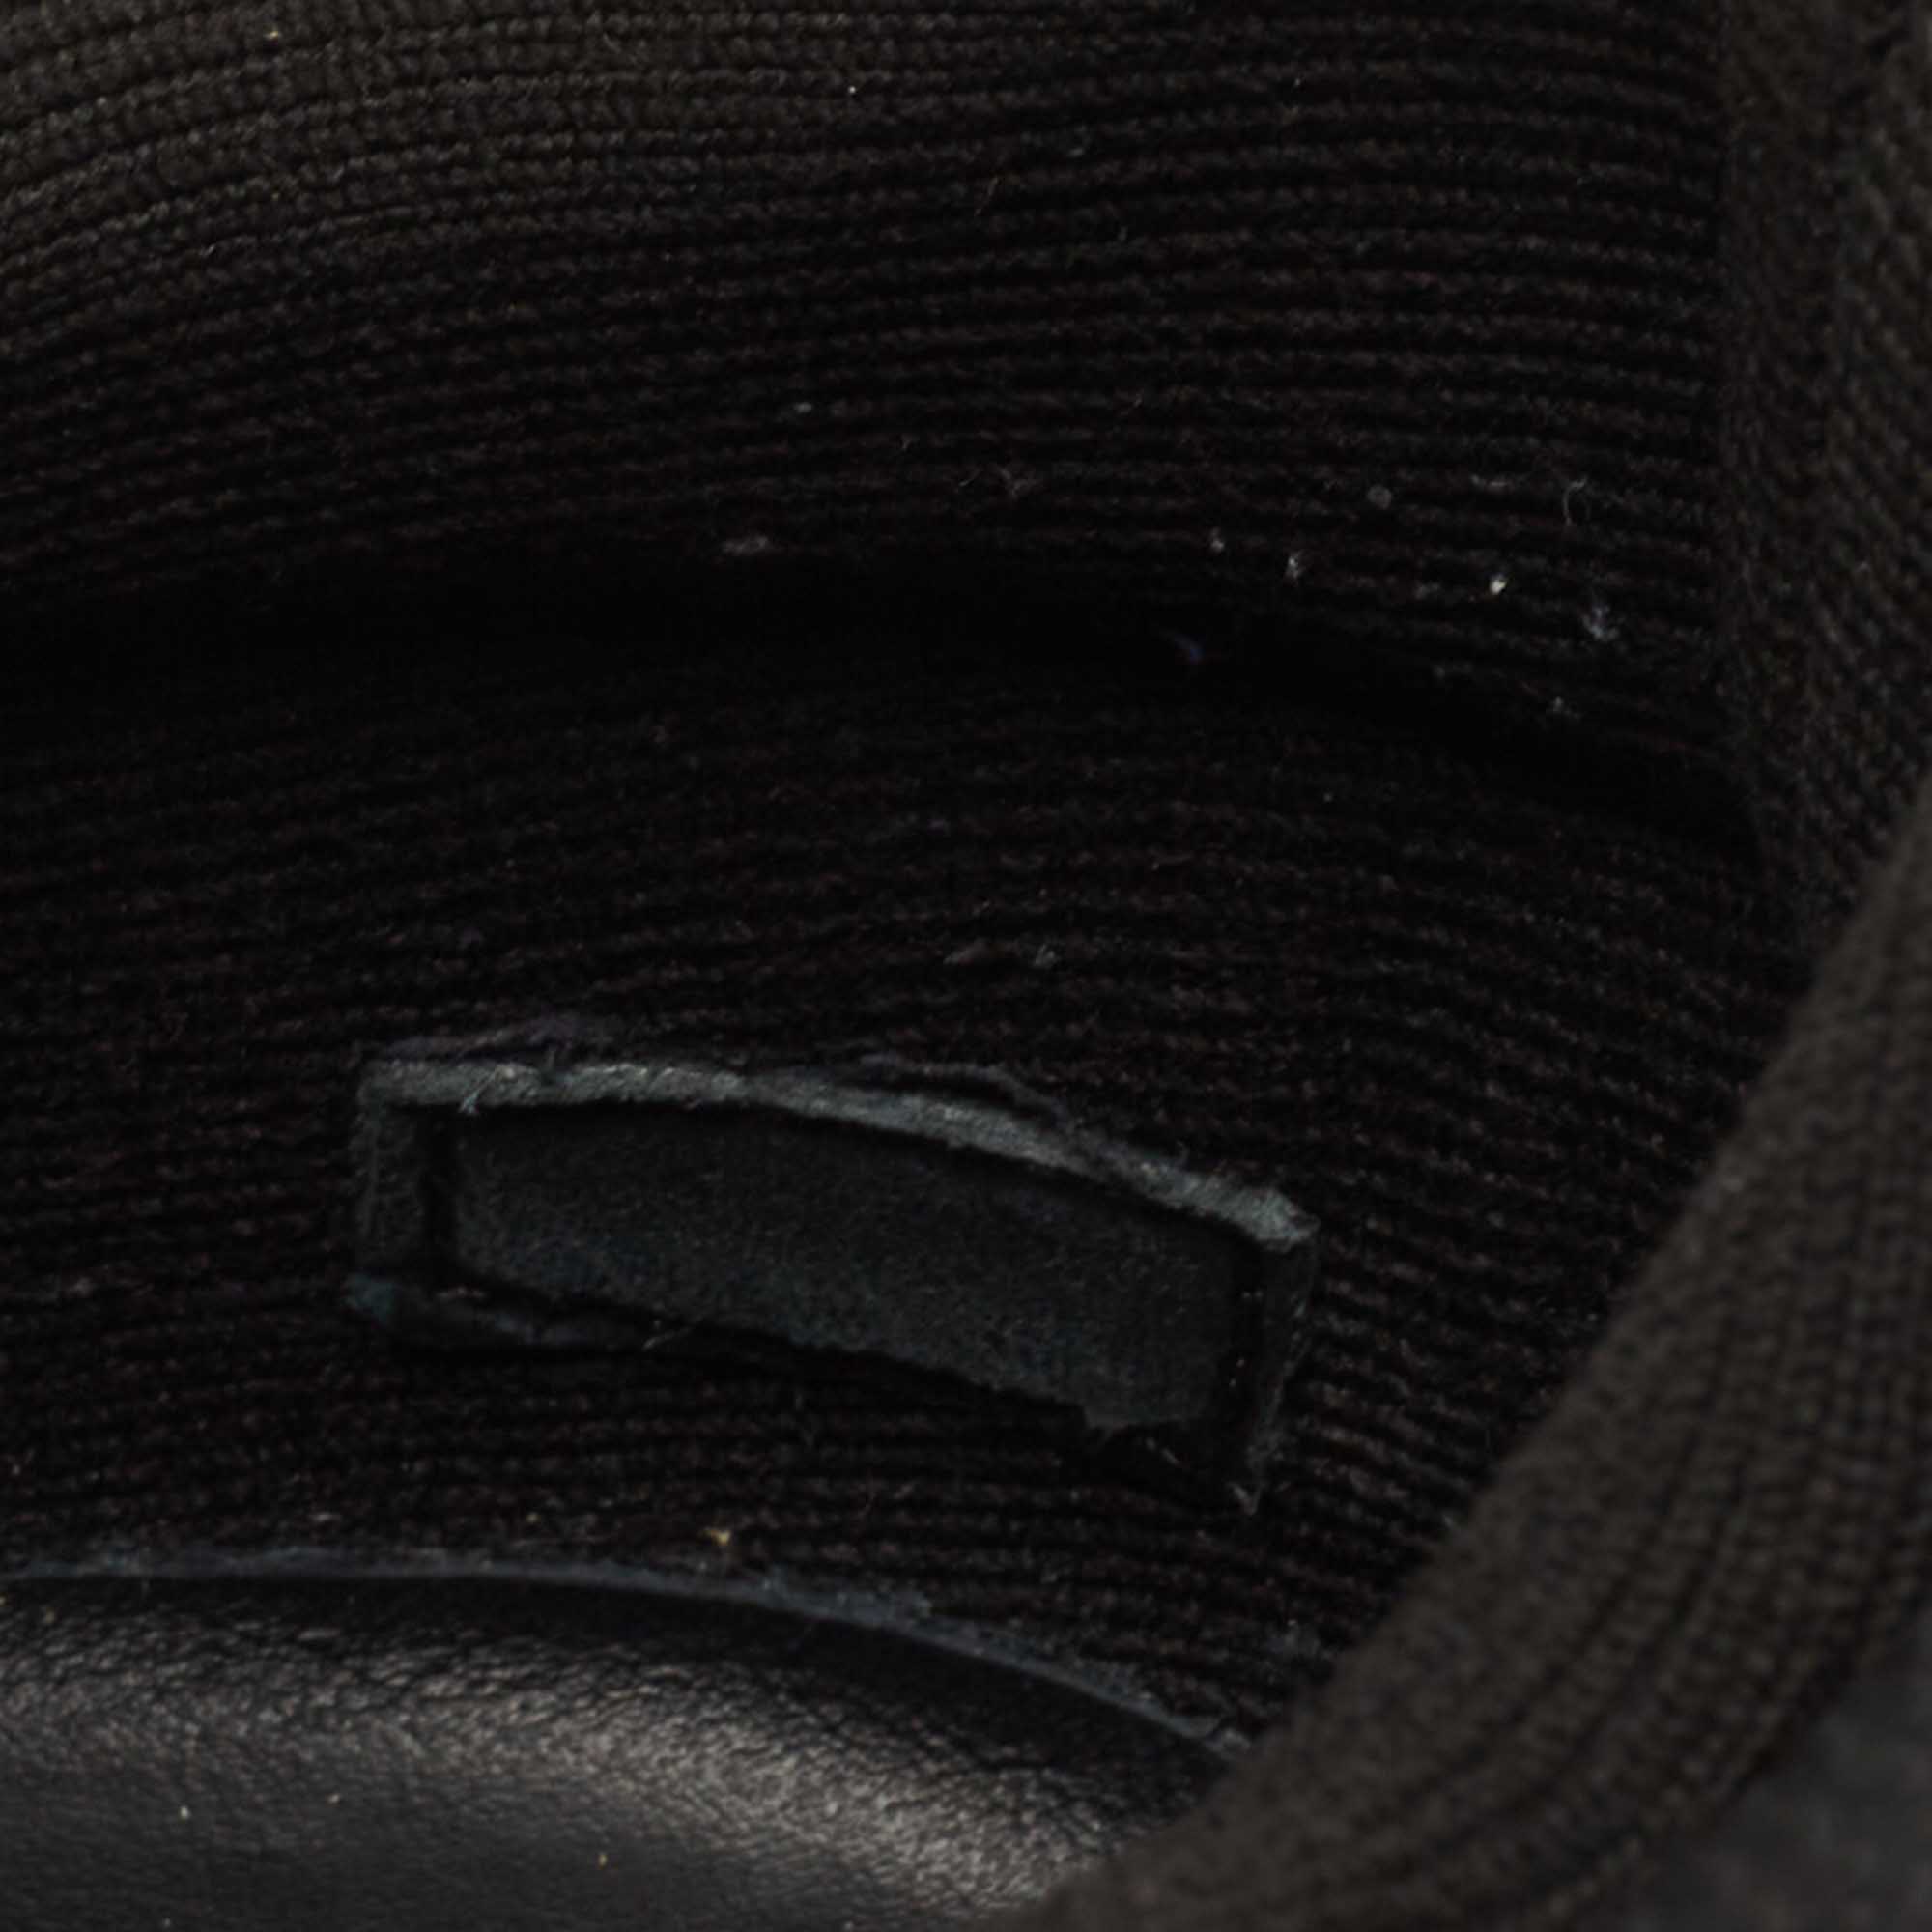 Louis Vuitton Black Knit Fabric VNR Low Top Sneakers, 43.5 - BOPF